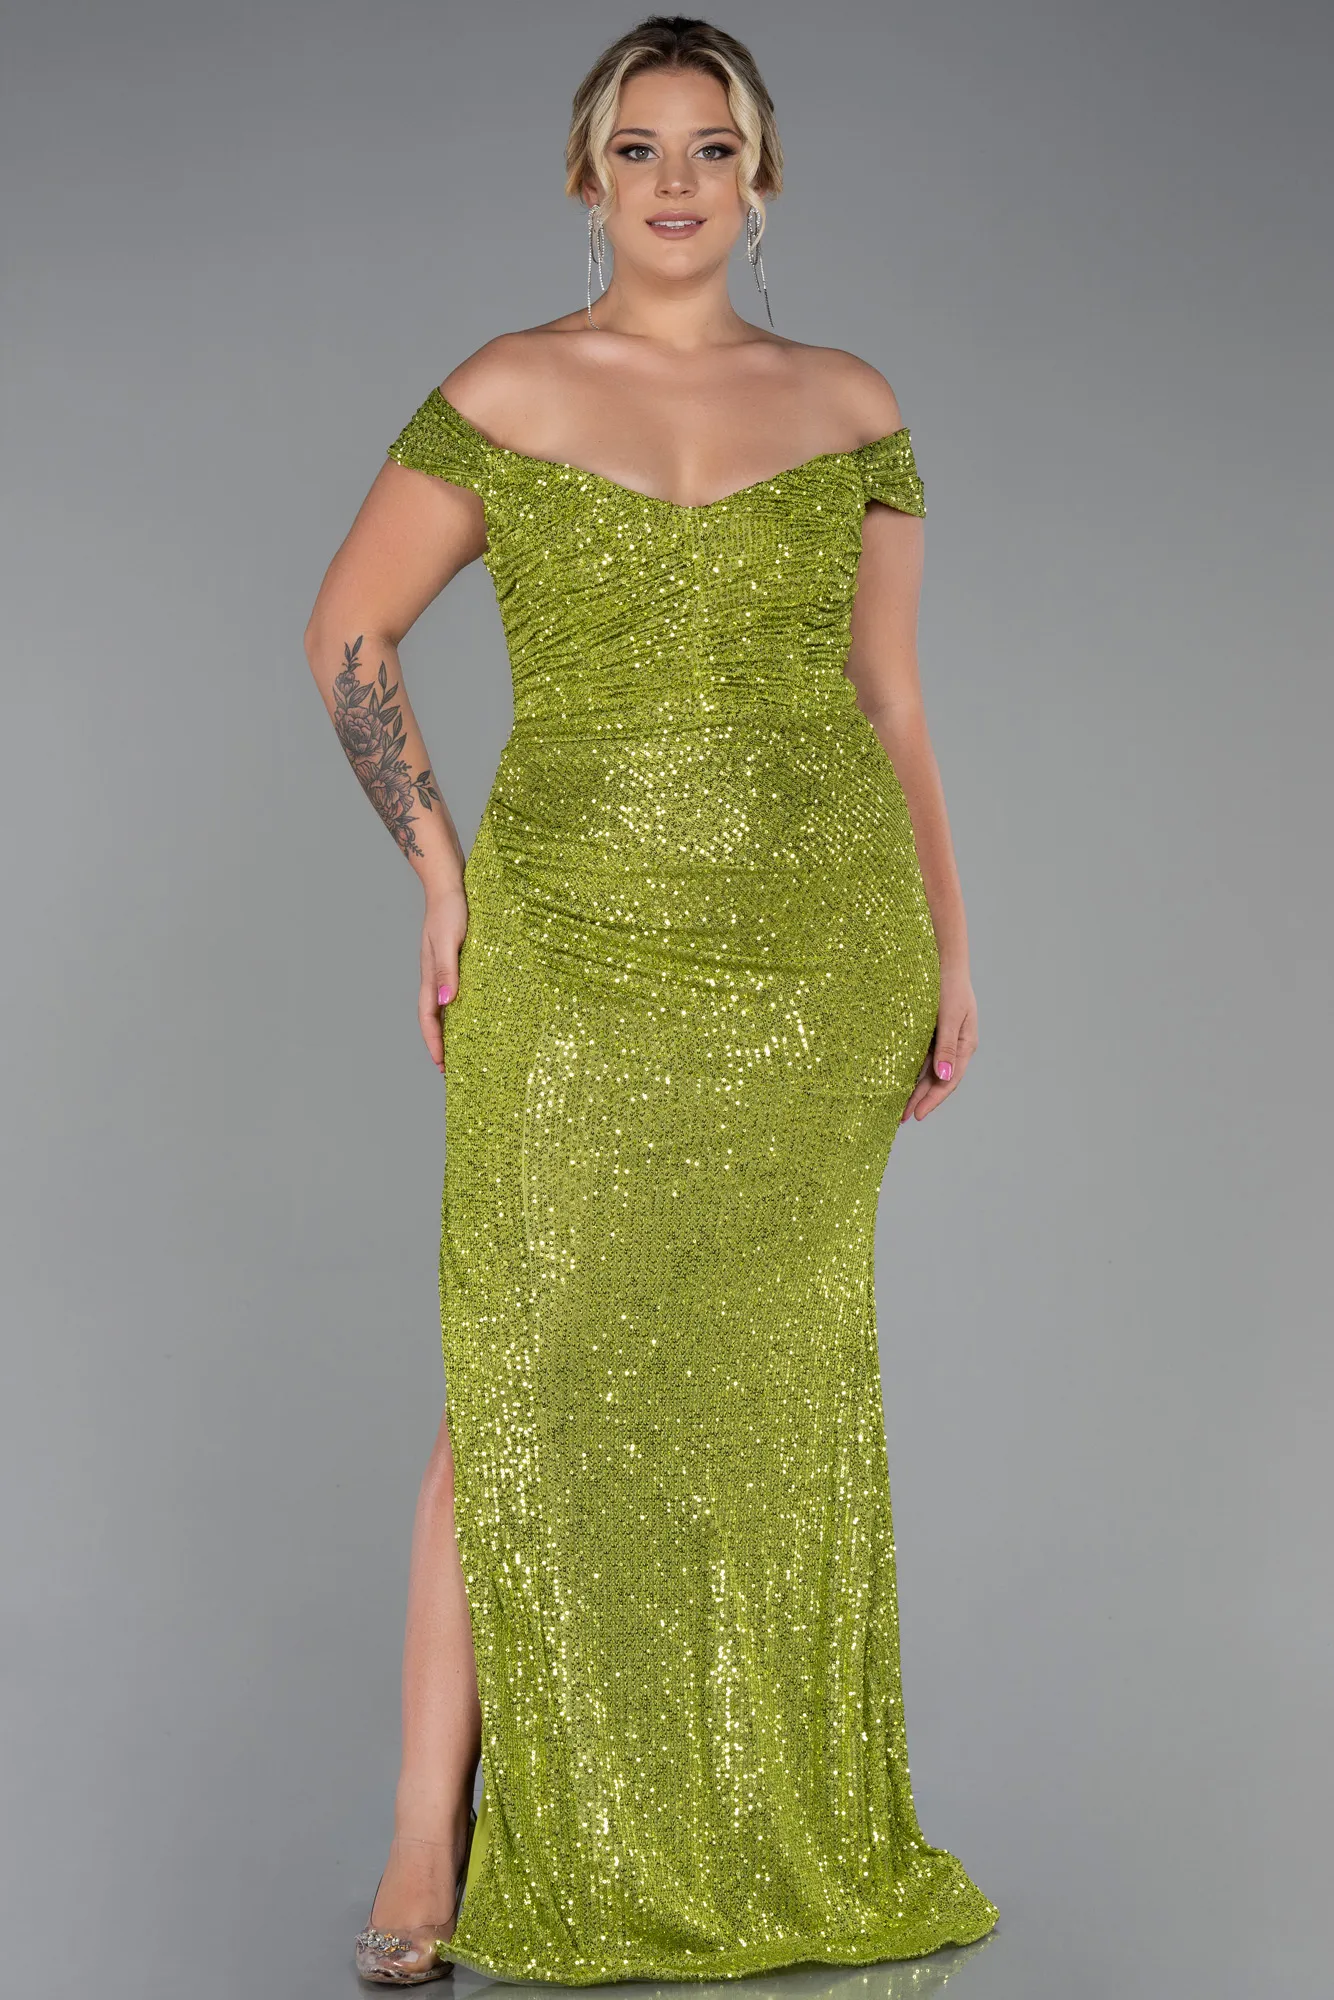 Pistachio Green-Long Scaly Plus Size Evening Dress ABU3203